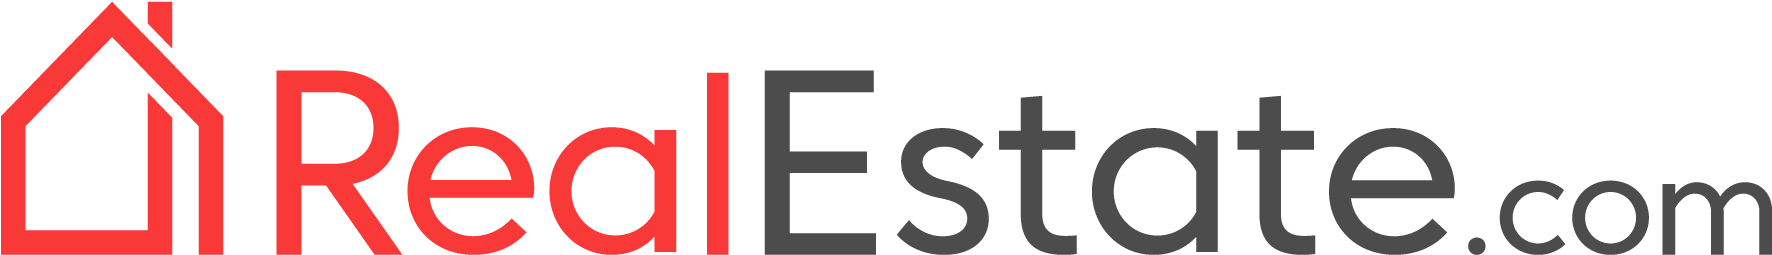 Realestate Com Logo Png (1875x376), Png Download